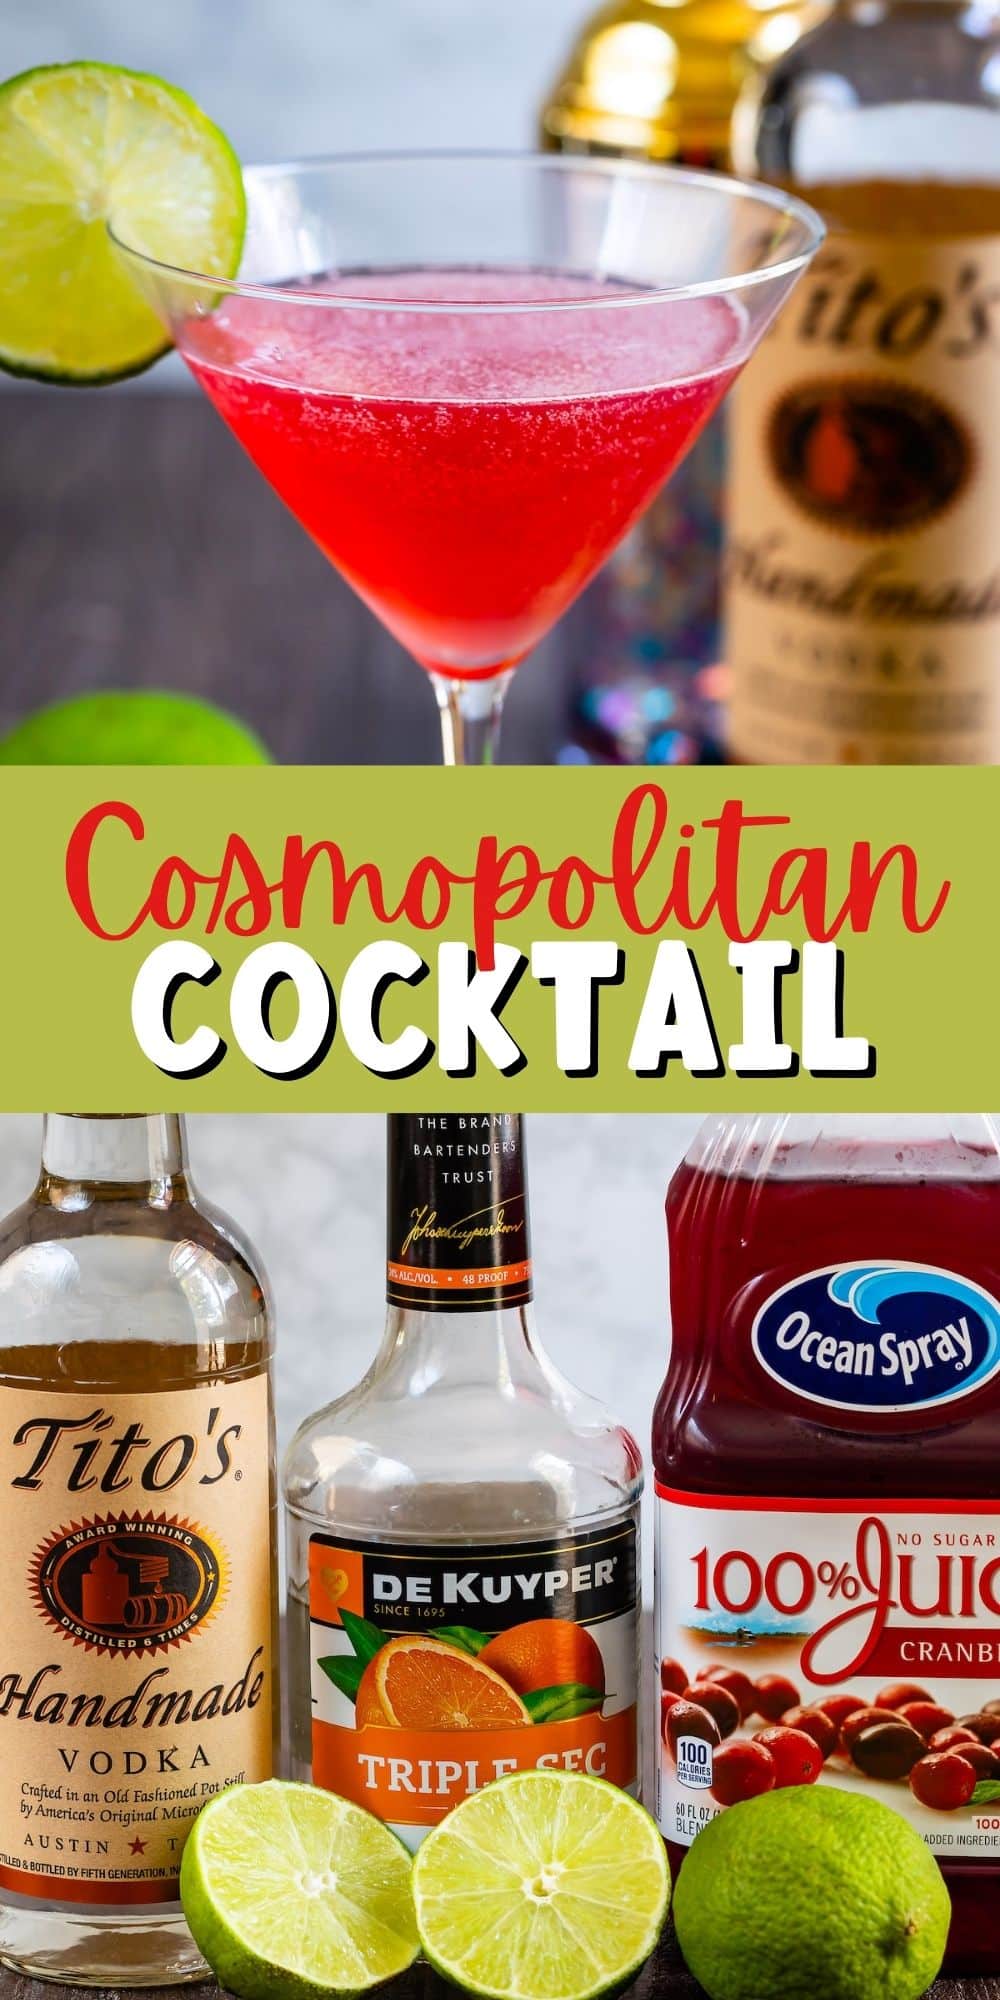 https://www.crazyforcrust.com/wp-content/uploads/2022/12/cosmopolitan-cocktail_collage.jpg